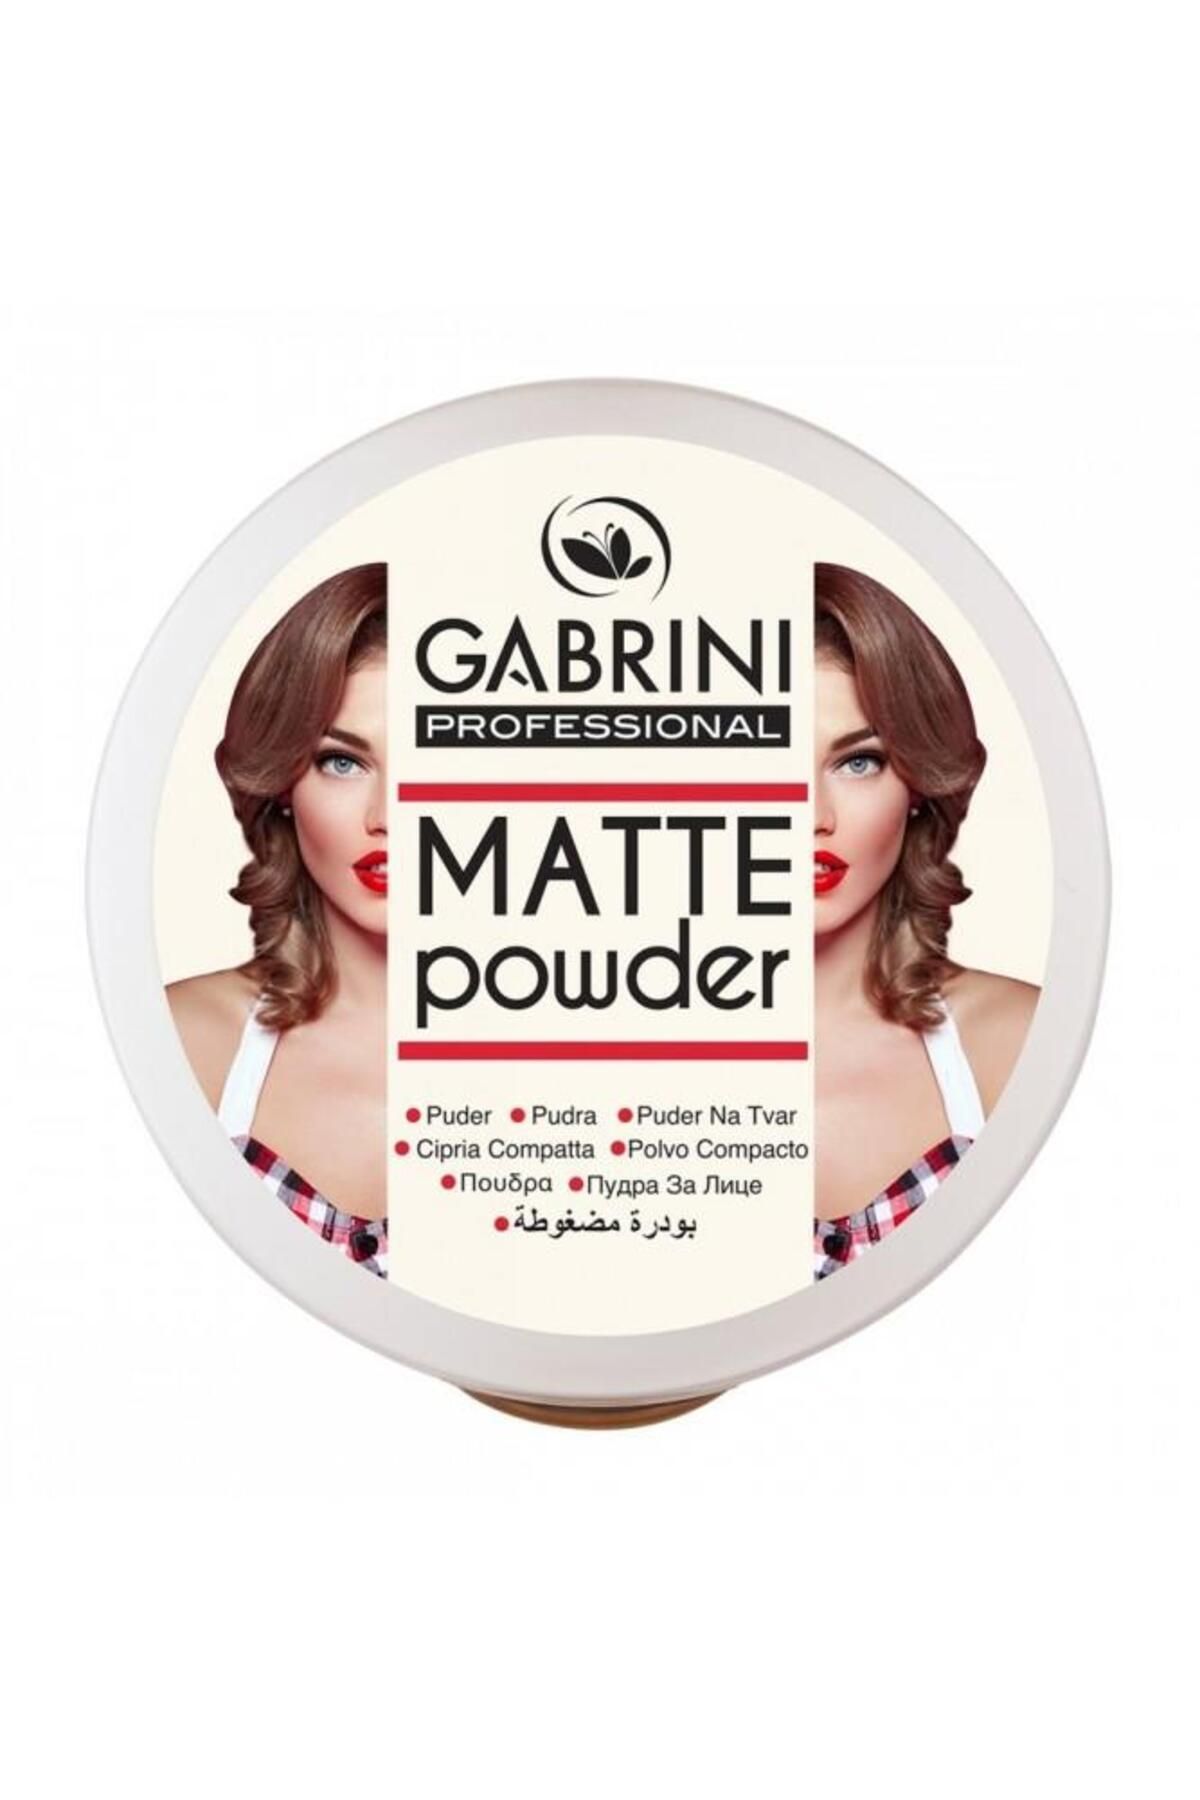 Gabrini Professional Matte Powder 01 (TOPTAN FİYATINA)